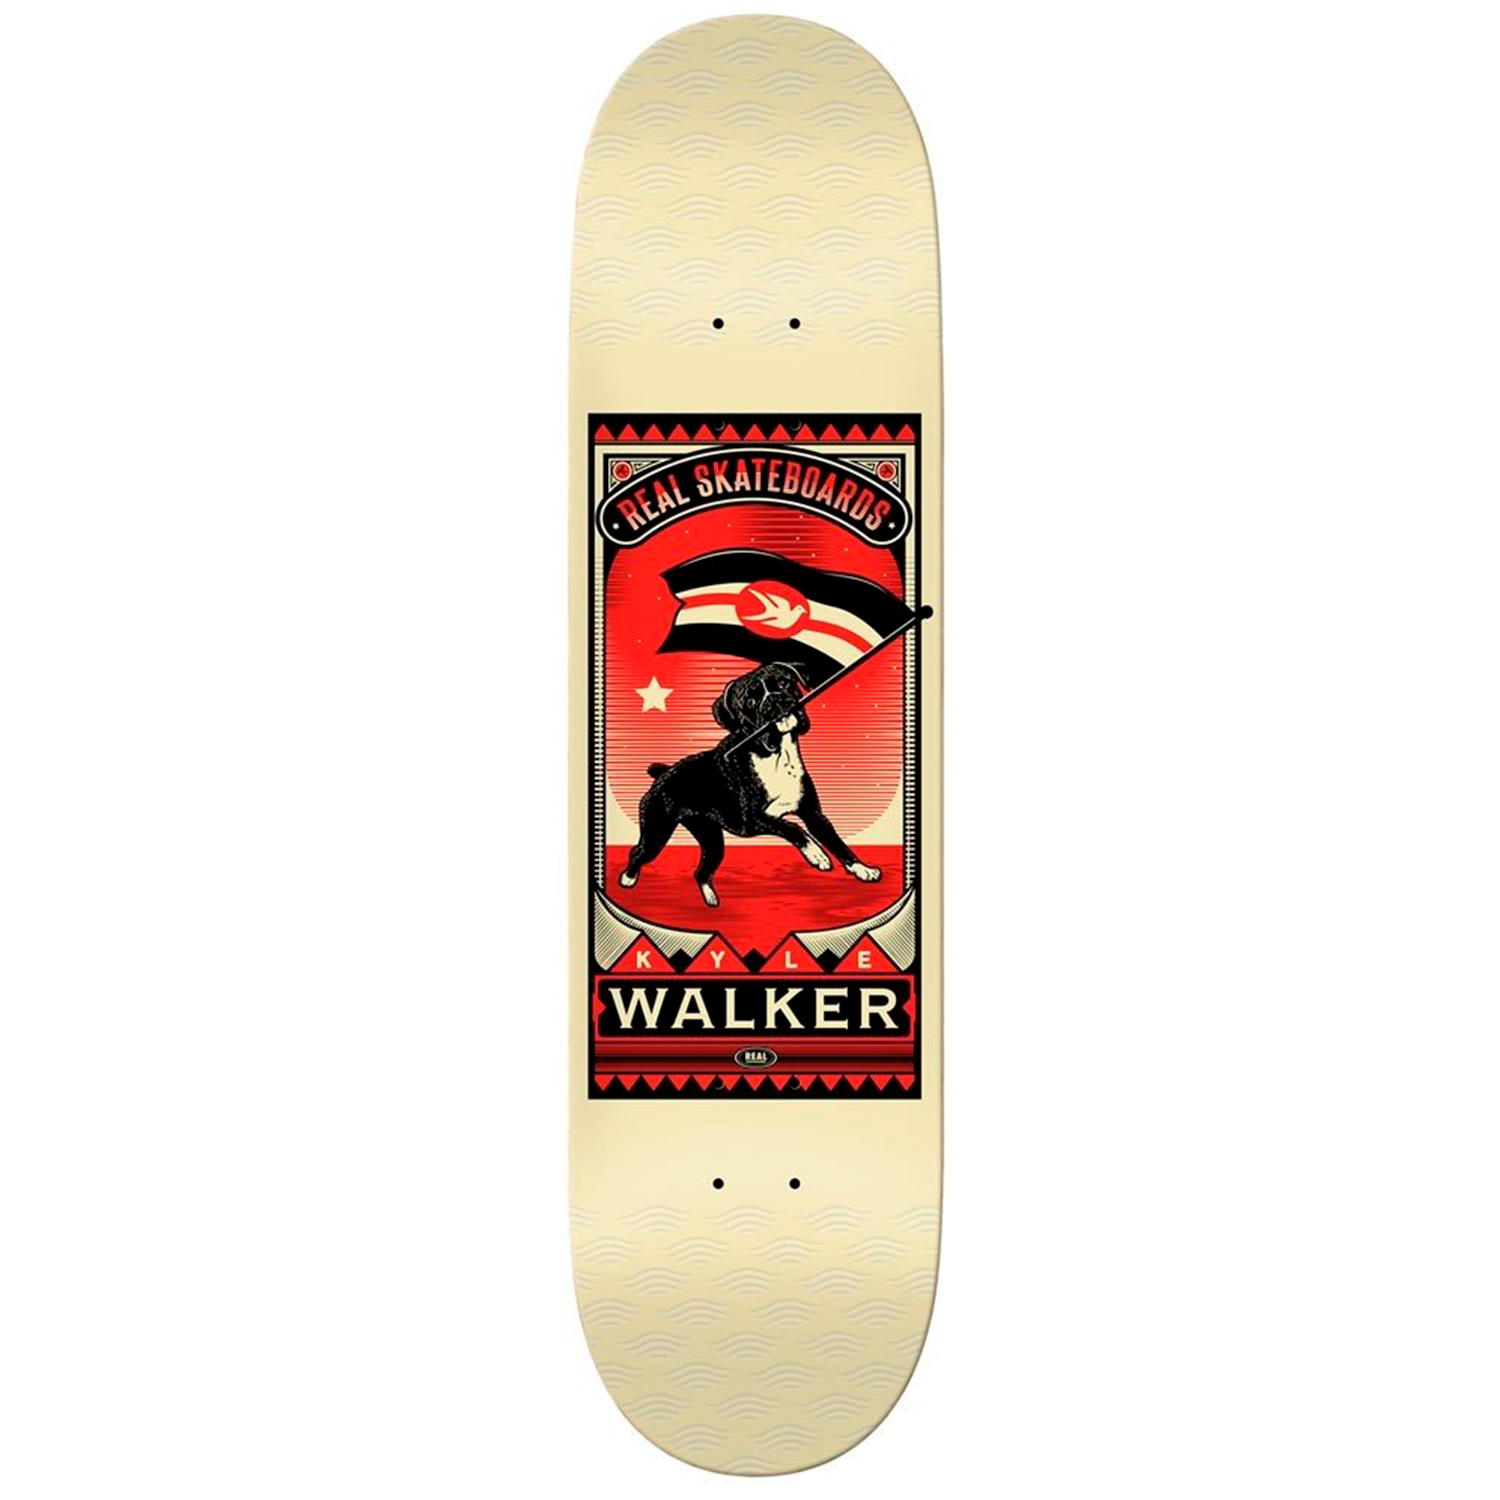 Tabla Real Walker Matchbook - 8.18''